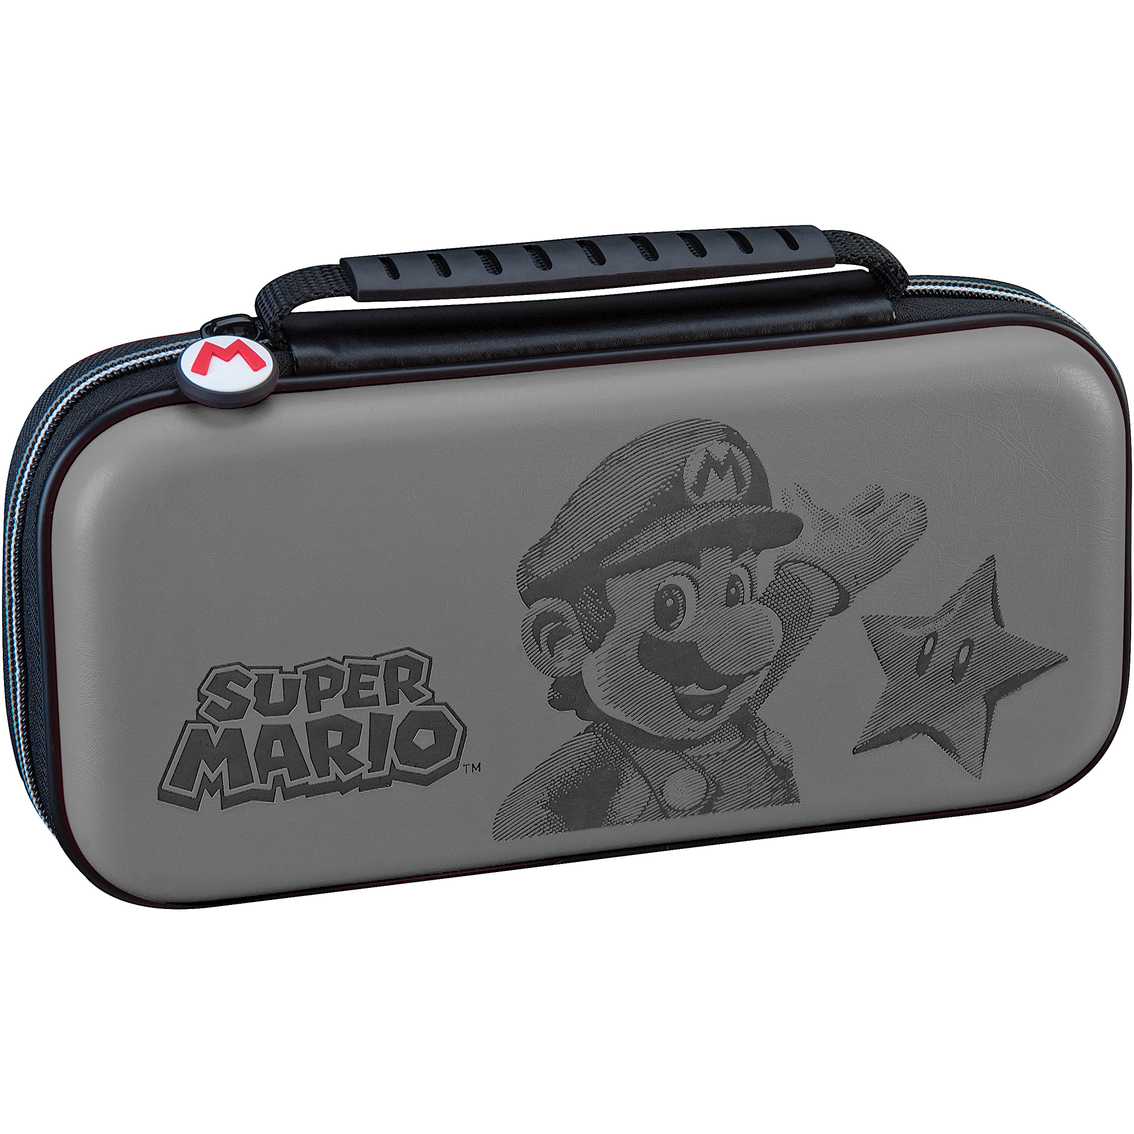 Nintendo Switch Game Traveler Deluxe Travel Case - Image 2 of 5